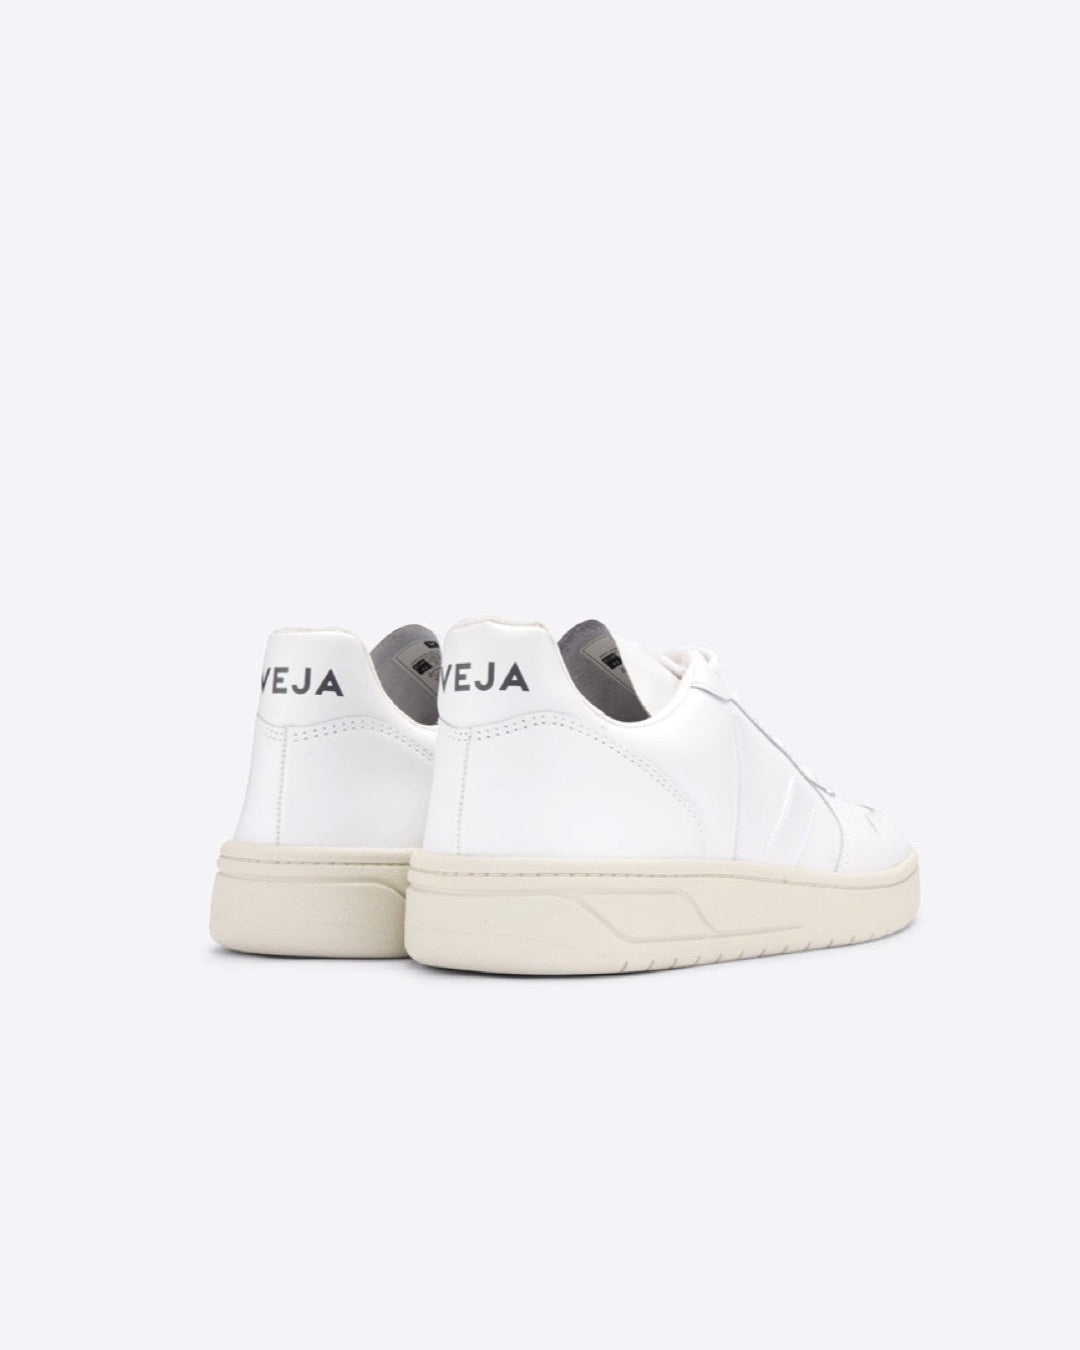 Veja - V-10 Leather Extra-White Sneakers by Veja - Prae Store